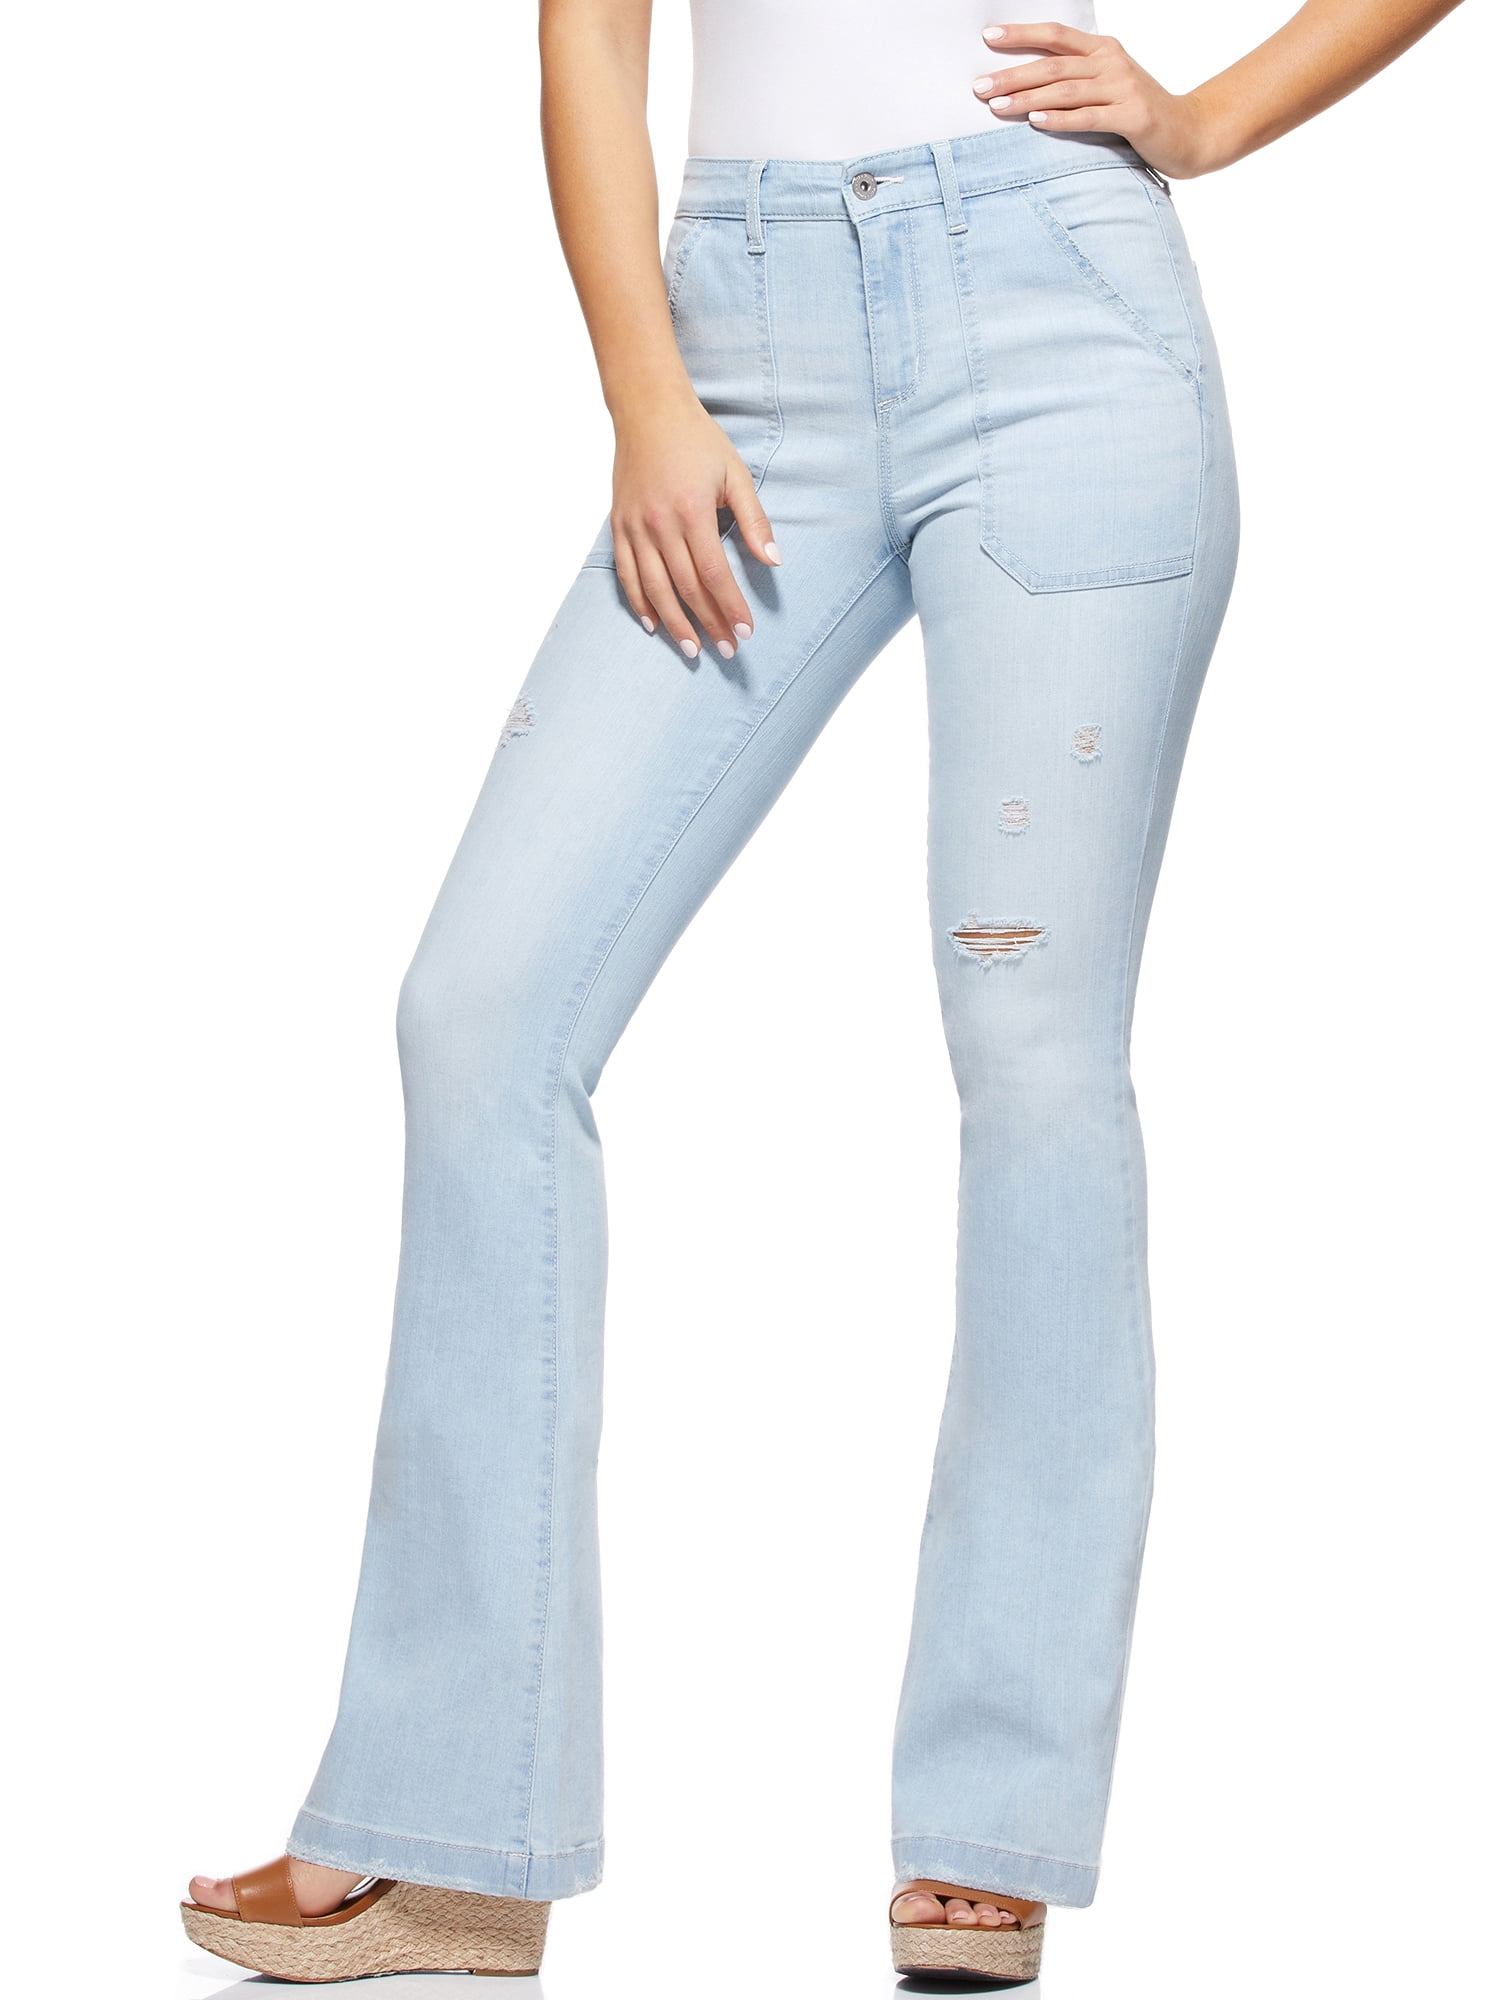 Sofia Jeans by Sofia Vergara Utility Flare Jeans, Women’s - Walmart.com